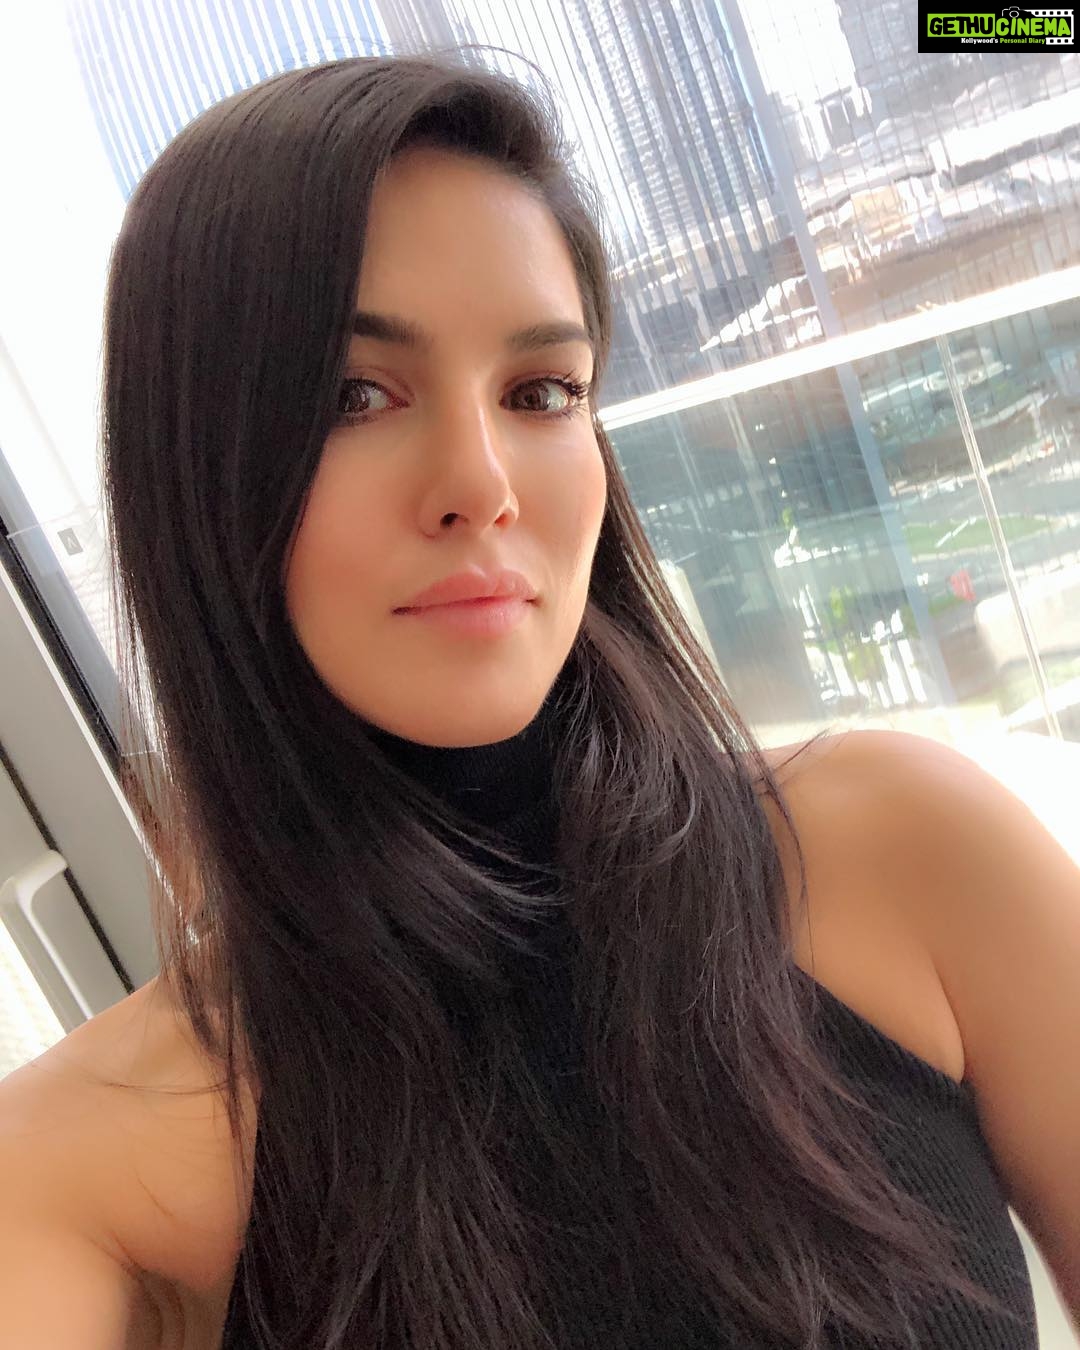 Eva Andressa Sex Video - Actress Sunny Leone Instagram Photos and Posts - August 2018 - Gethu Cinema